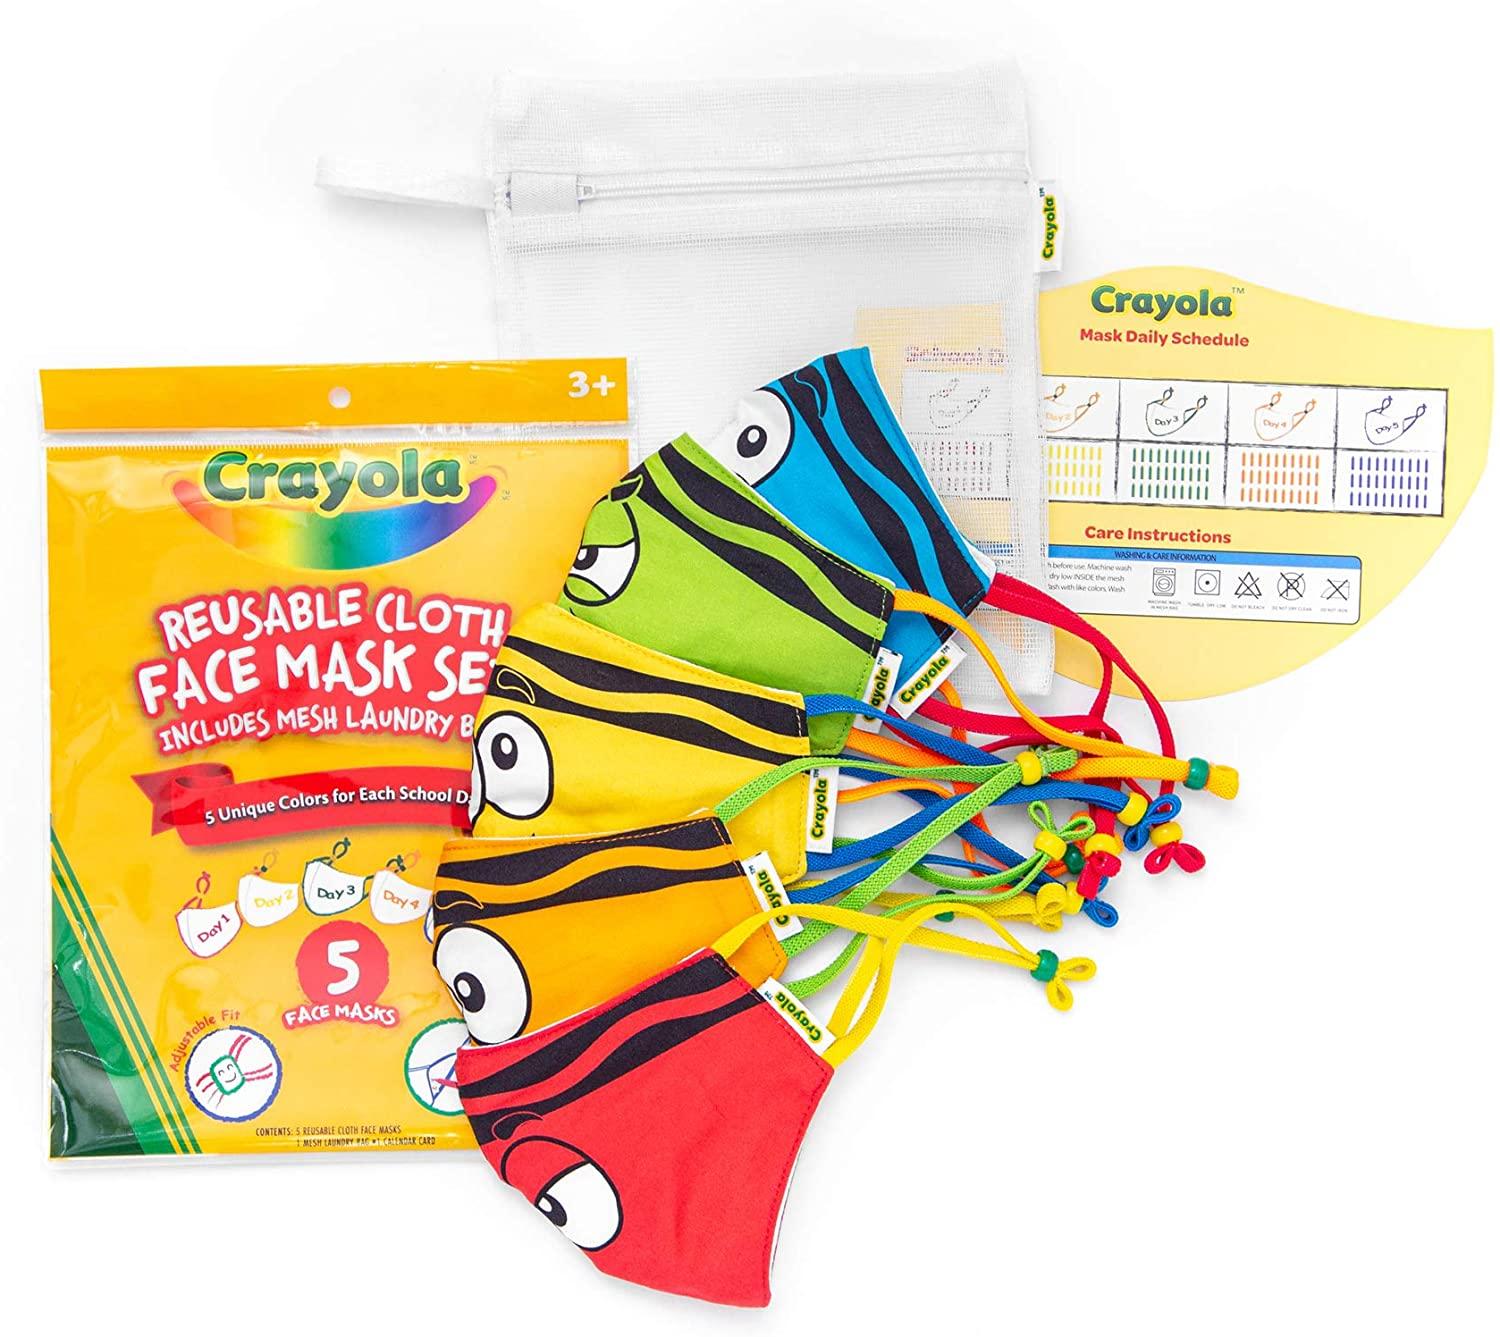 5 Crayola Kids Face Mask for $23.99